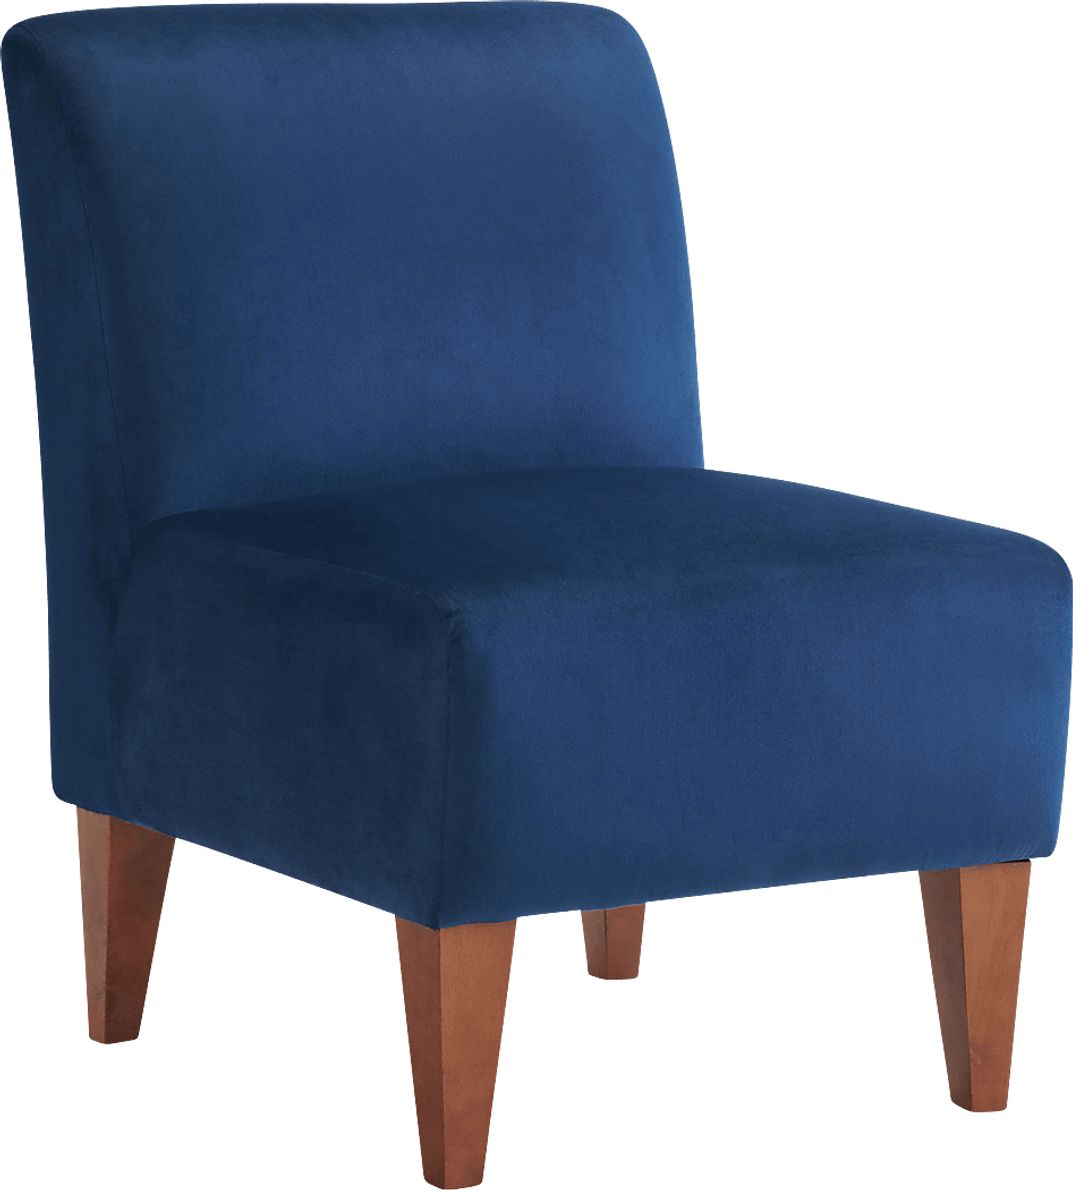 Fielden II Accent Chair